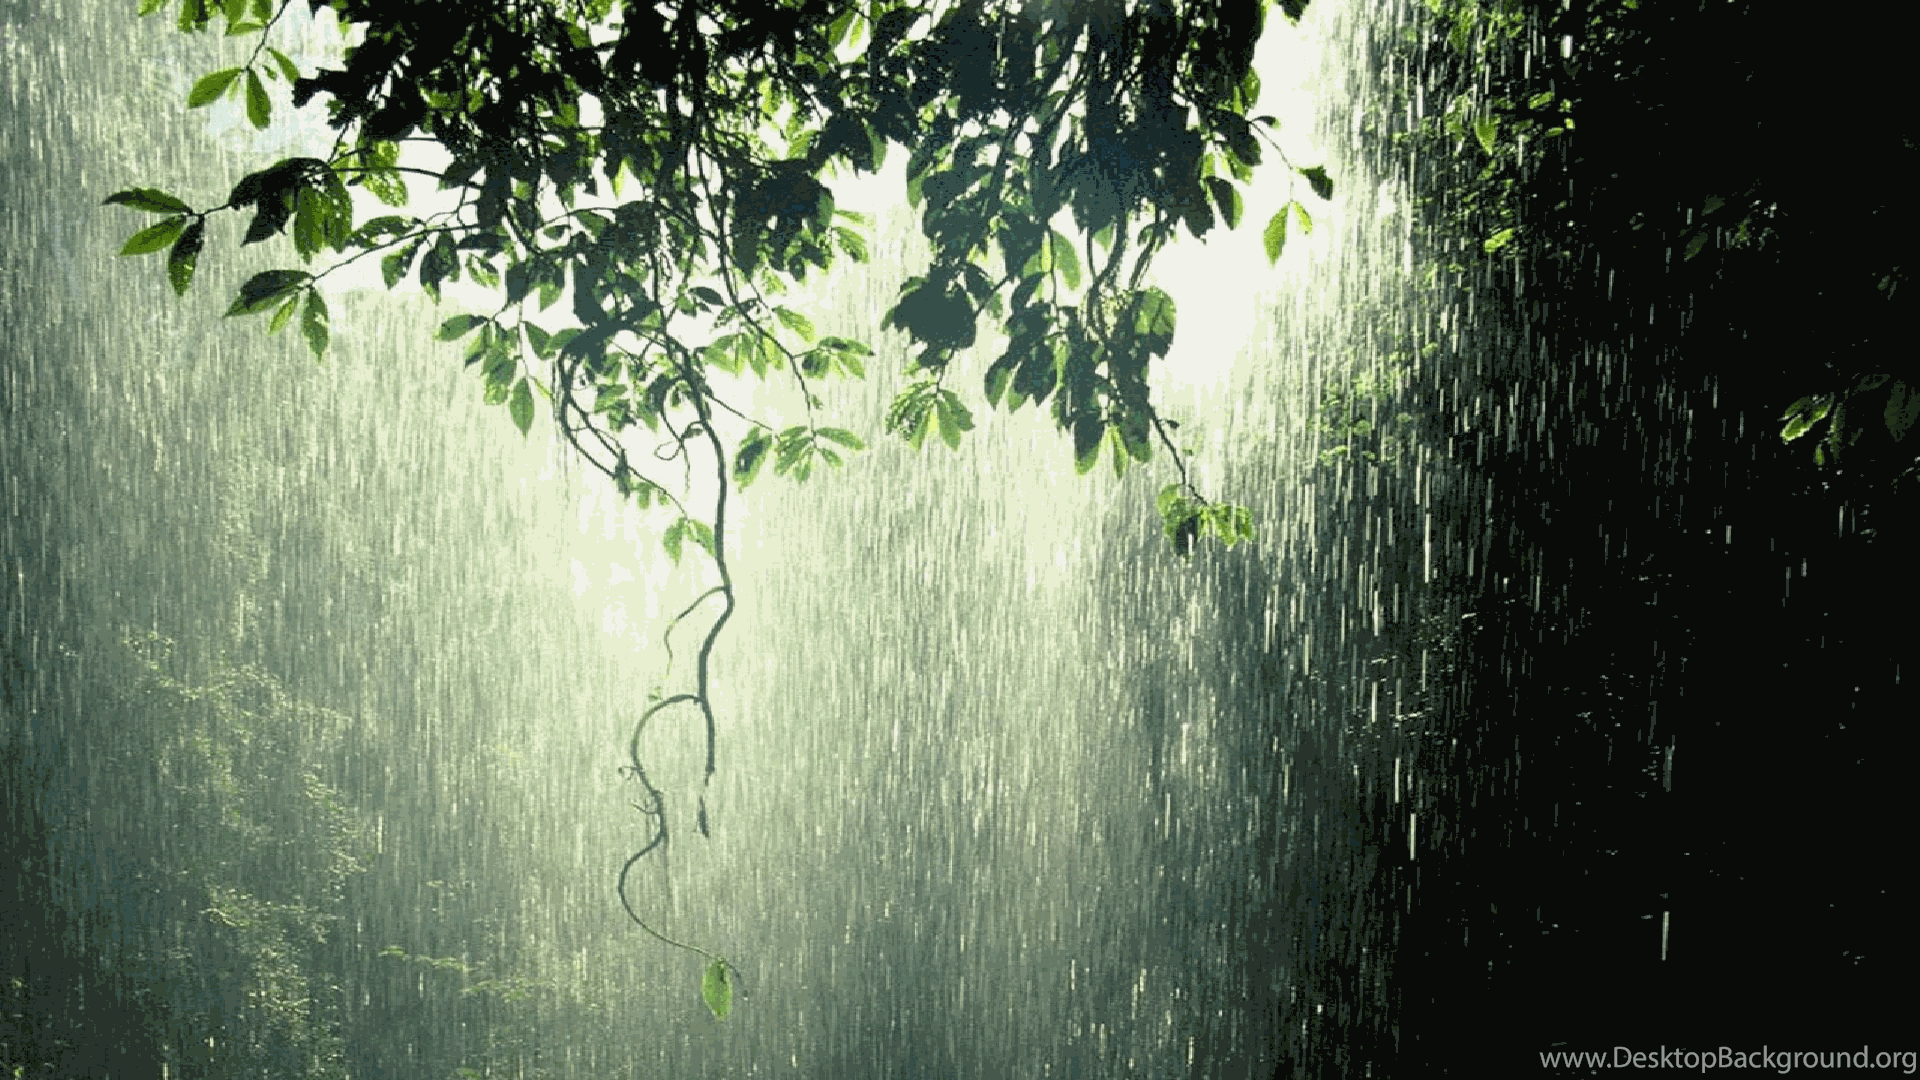 Raining In Forest Computer Wallpaper, Desktop Background